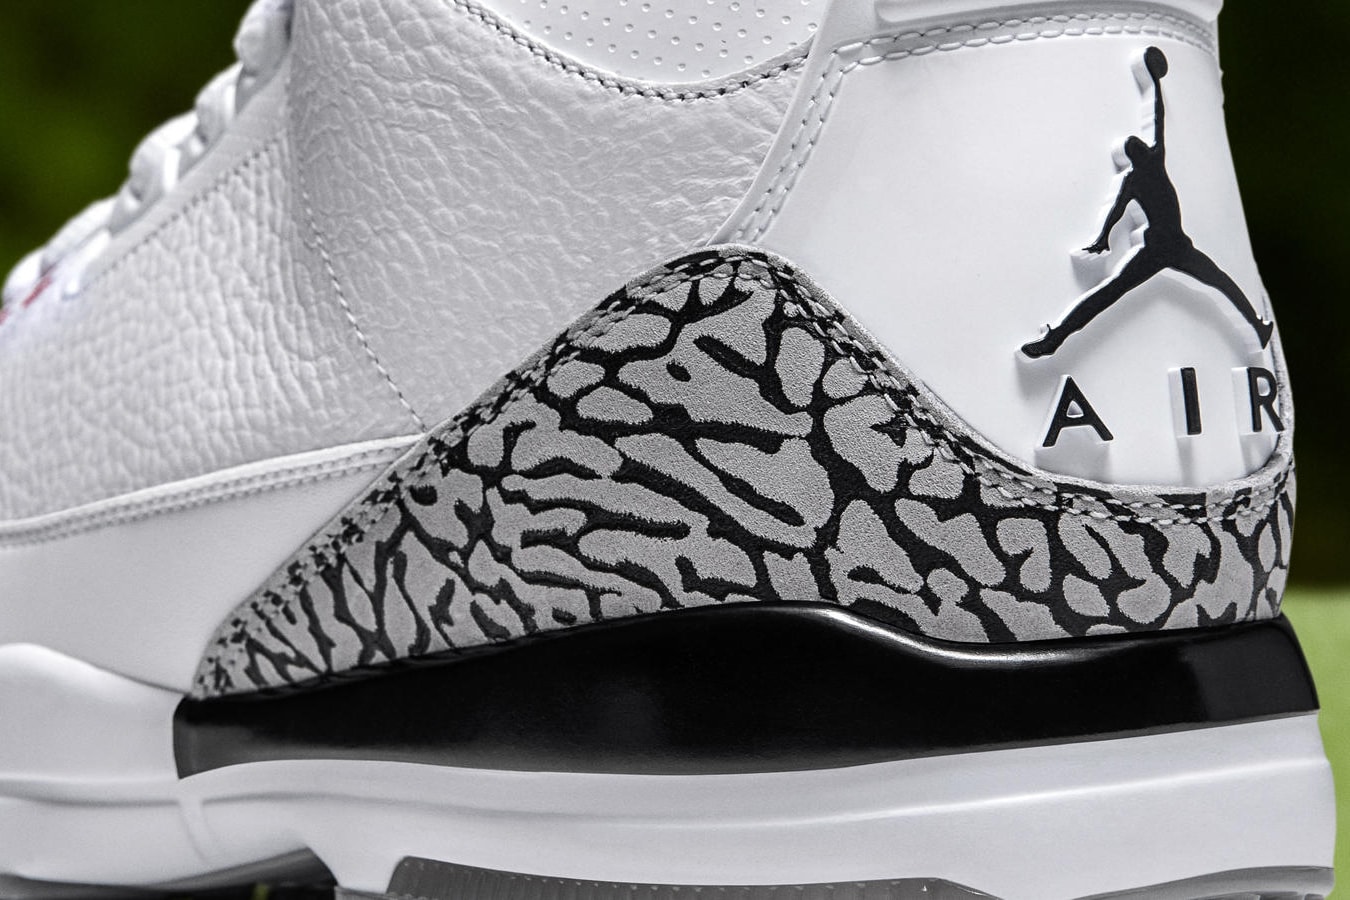 Air Jordan 3 Golf white cement bronze brown premium footwear release date details info drops february 16 2018